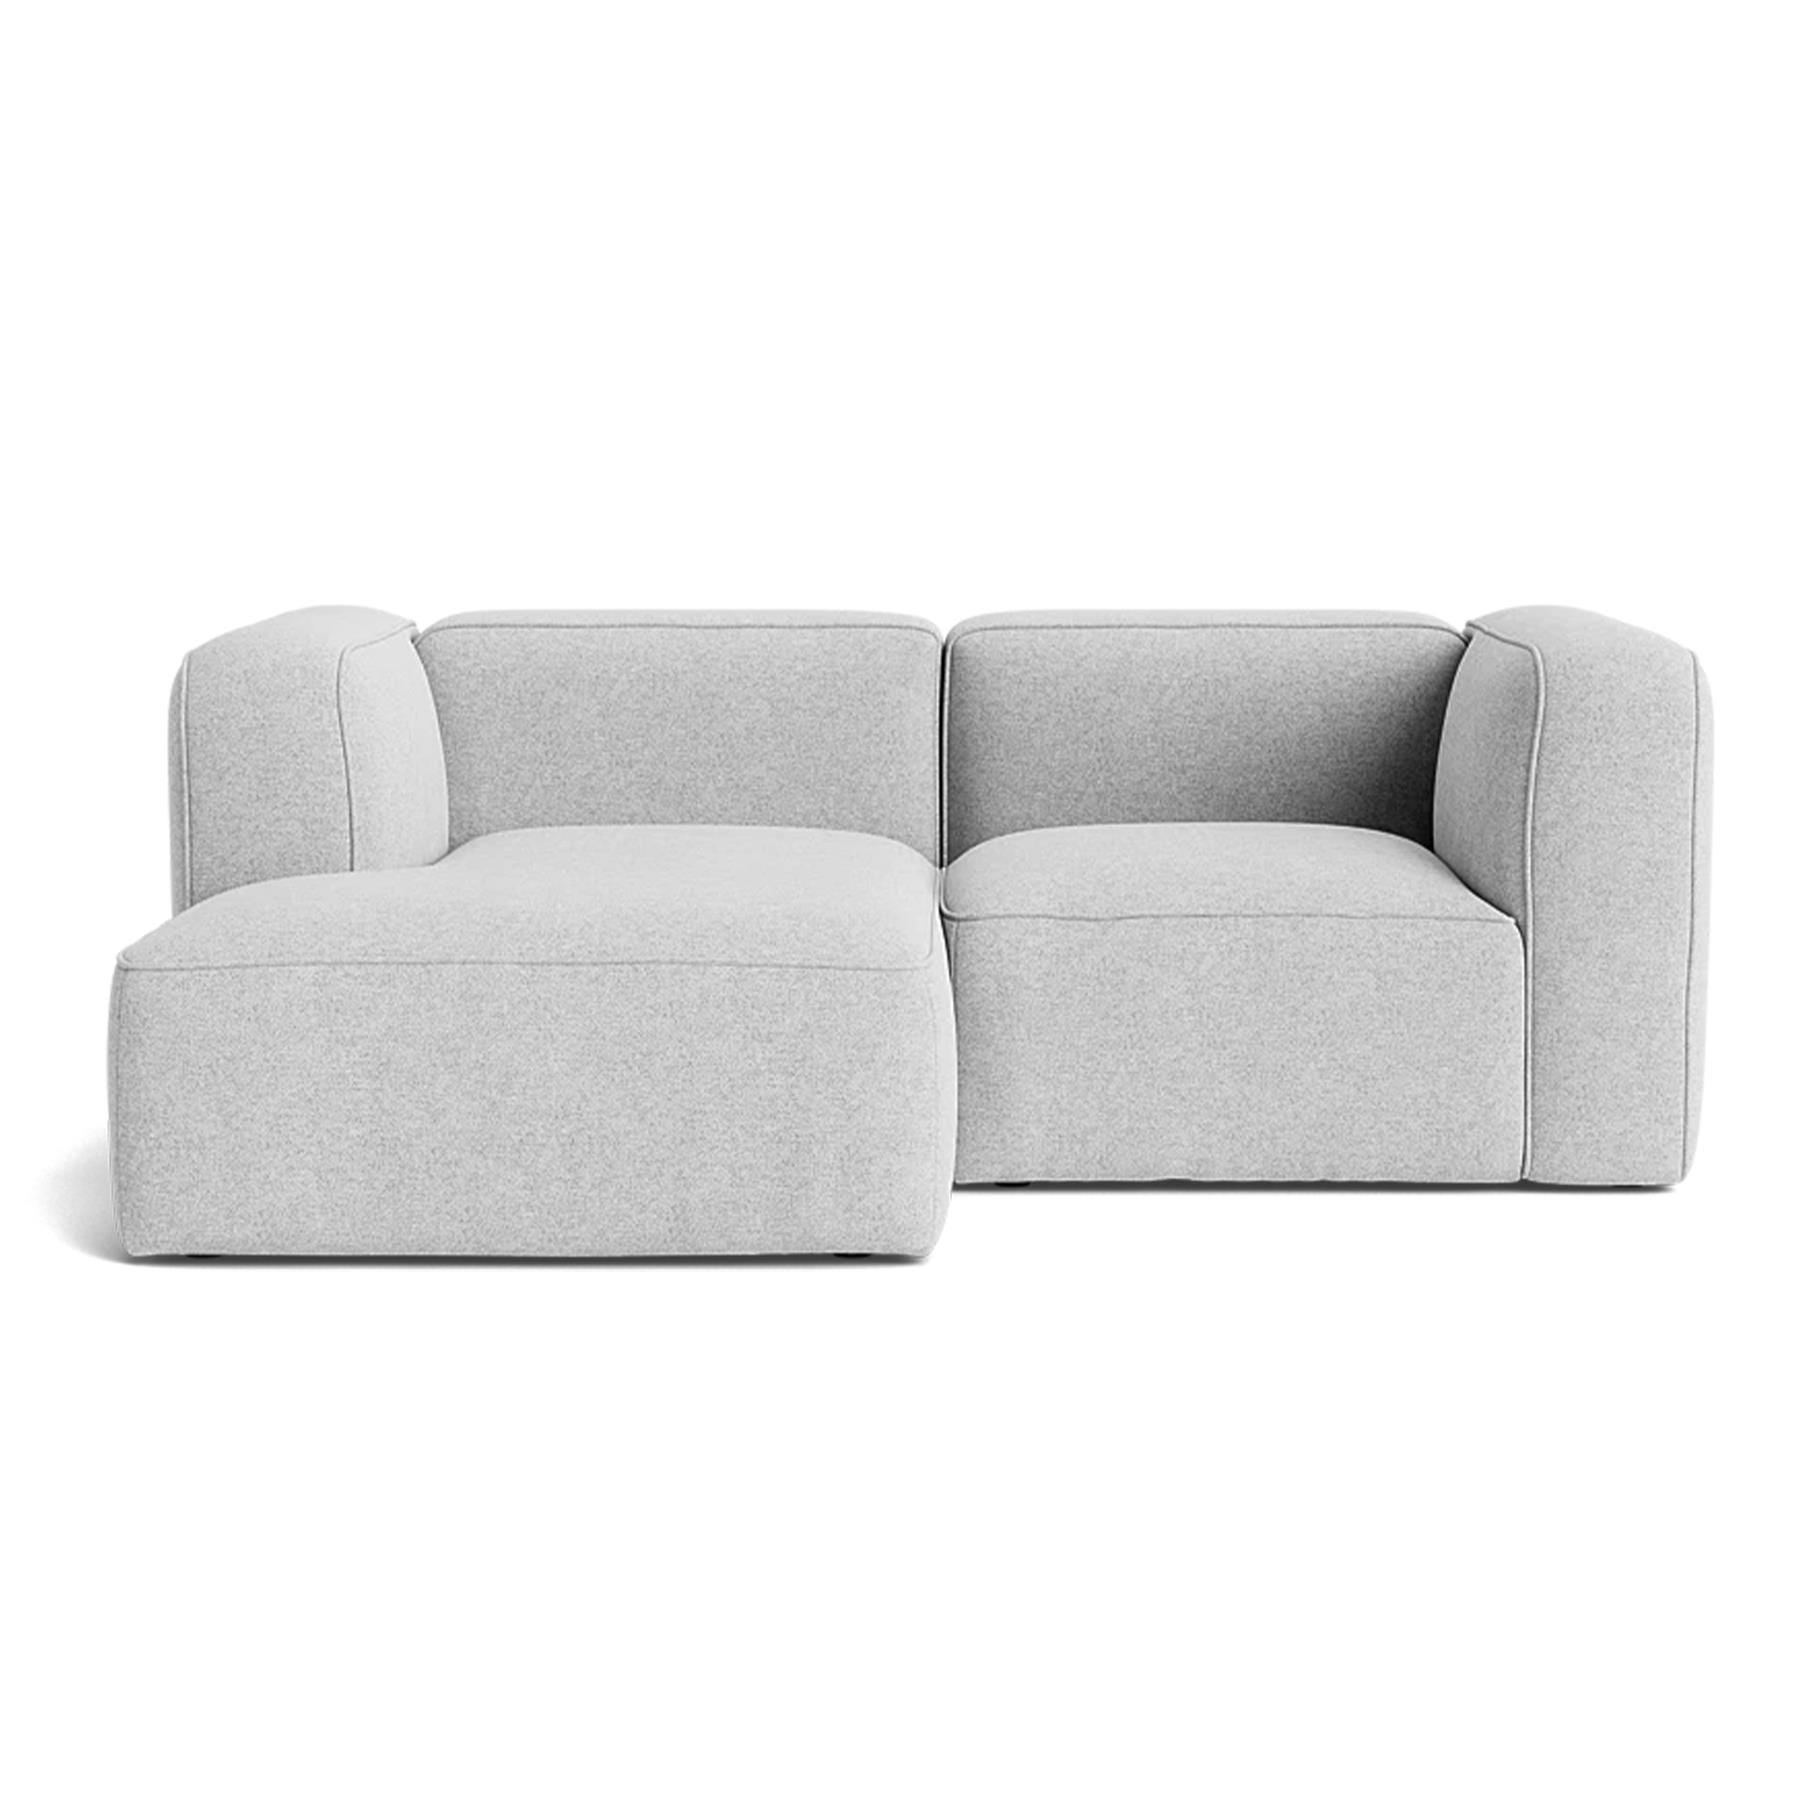 Make Nordic Basecamp Small Sofa Hallingdal 116 Left Grey Designer Furniture From Holloways Of Ludlow